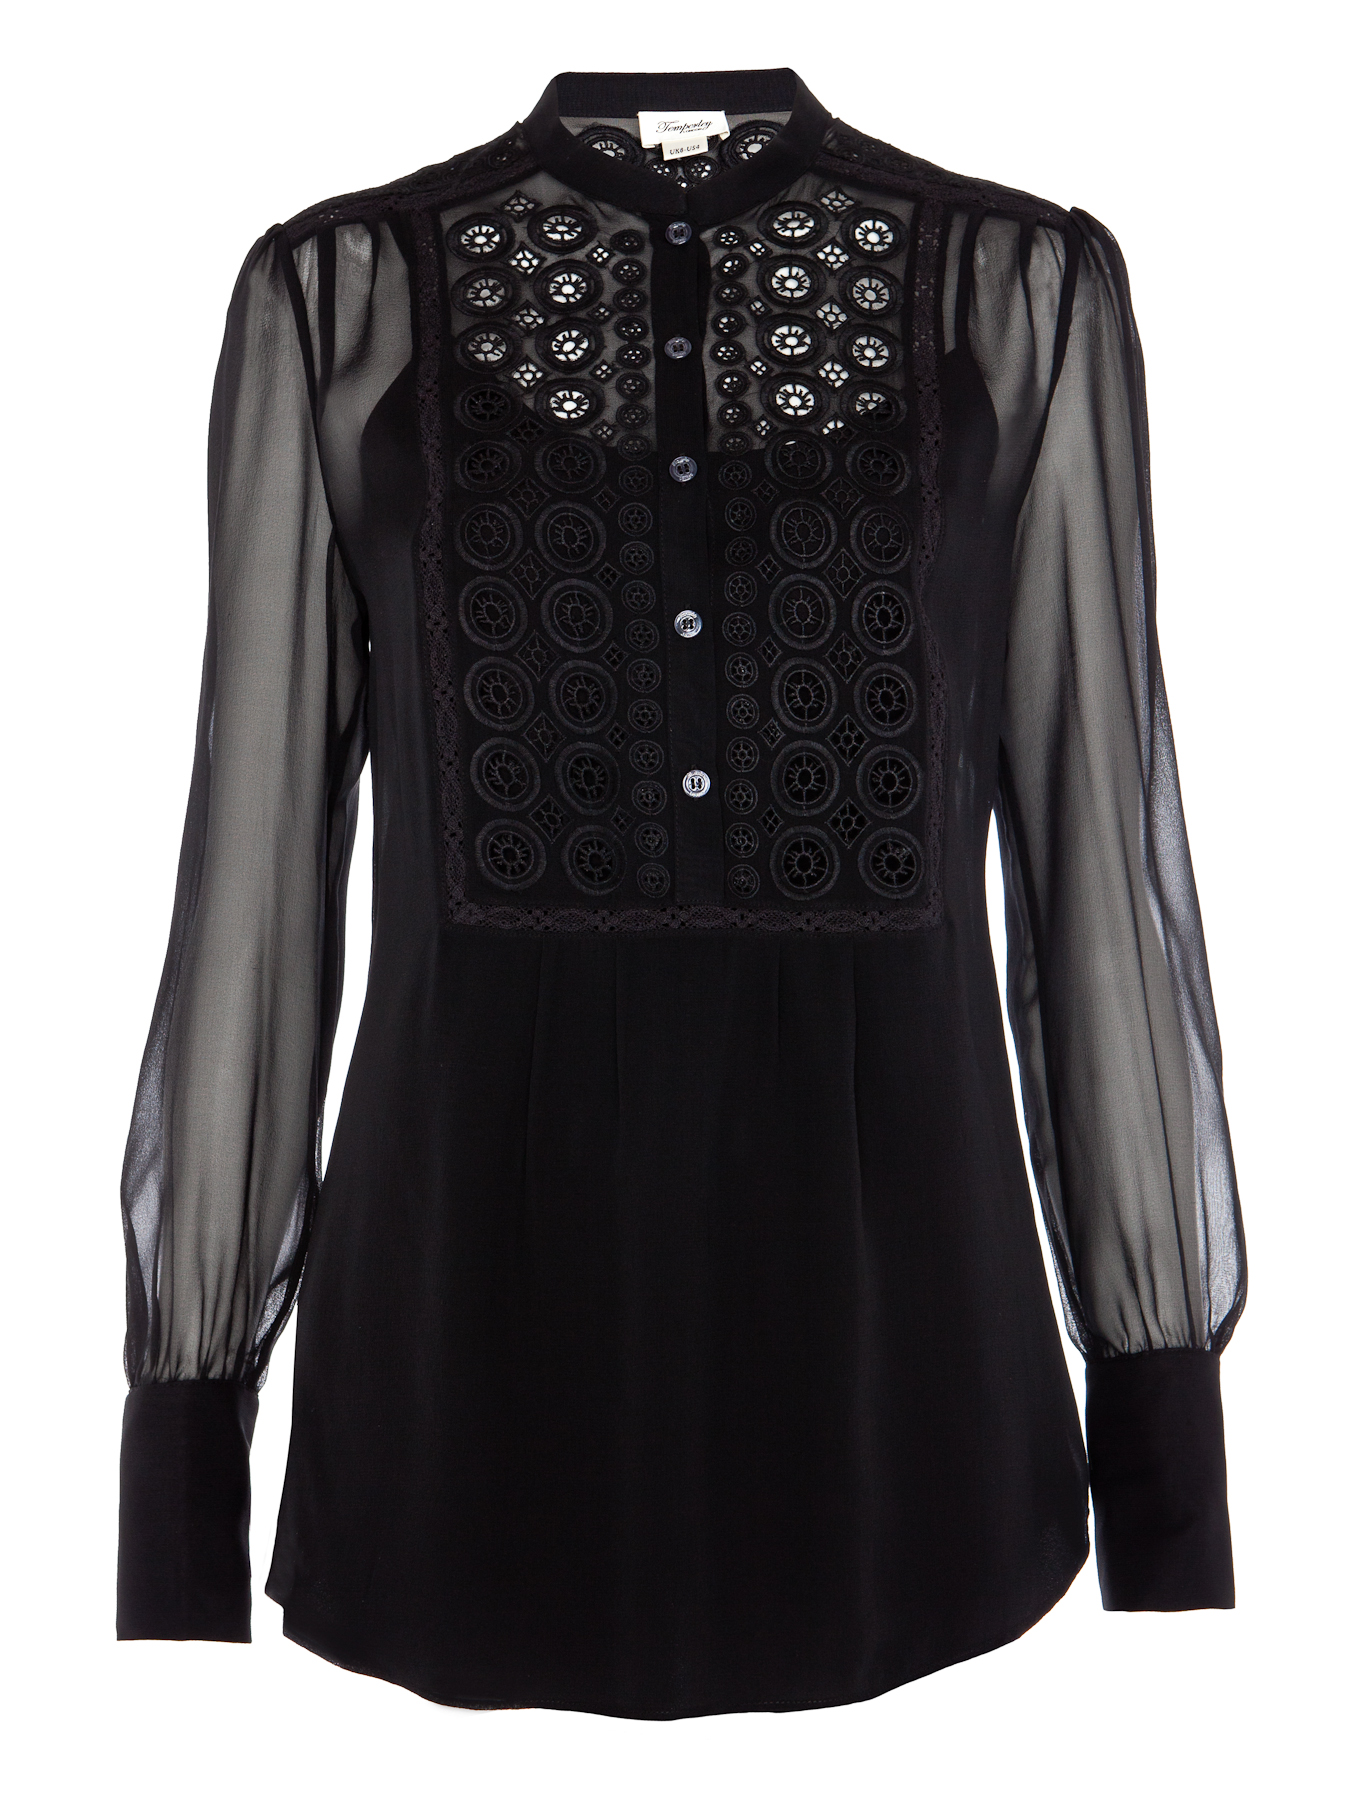 Lyst - Temperley London Moriah Shirt in Black